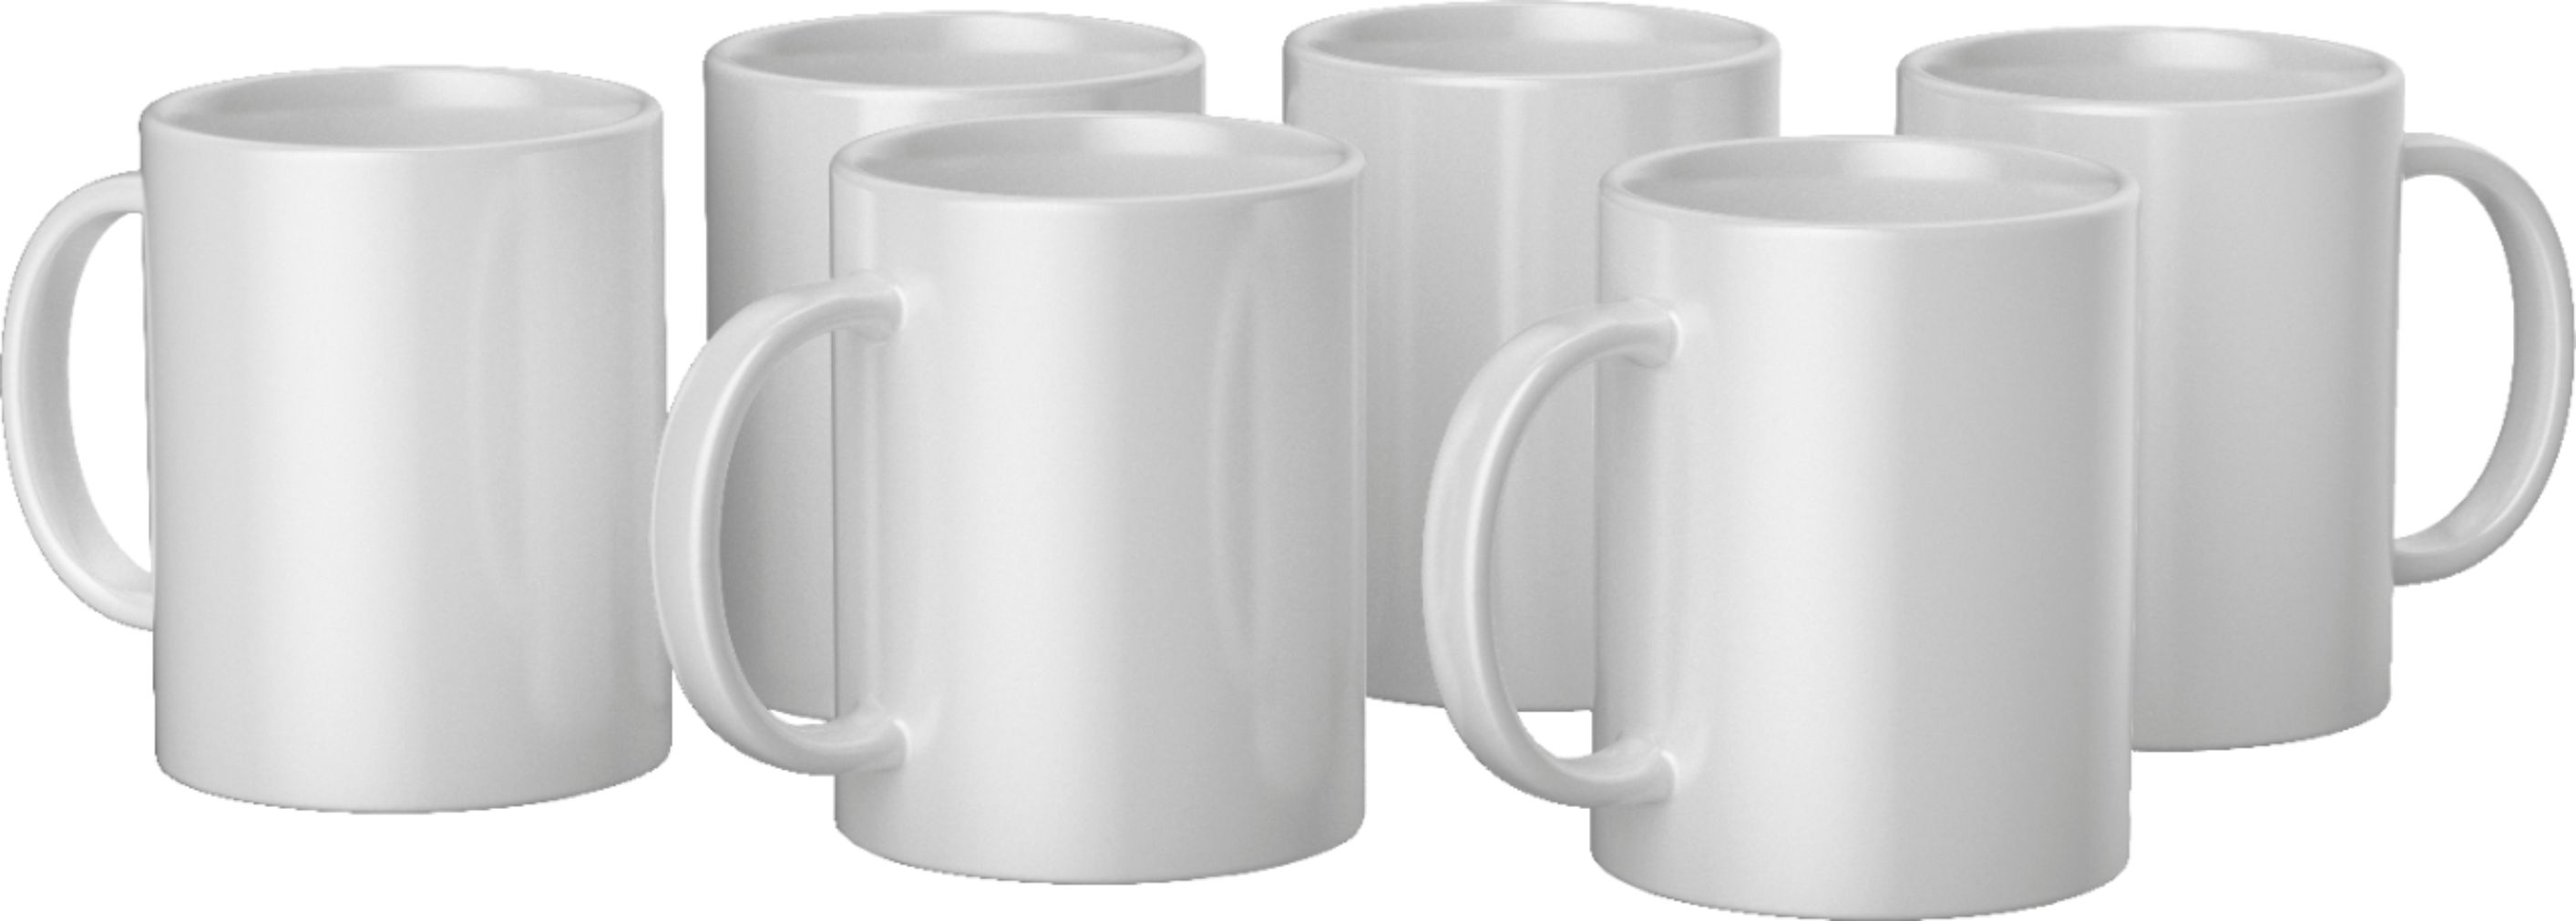 Cricut Ceramic Coffee Mug Sublimation Blank 1 Pack 15 oz//425 ml White//Gray